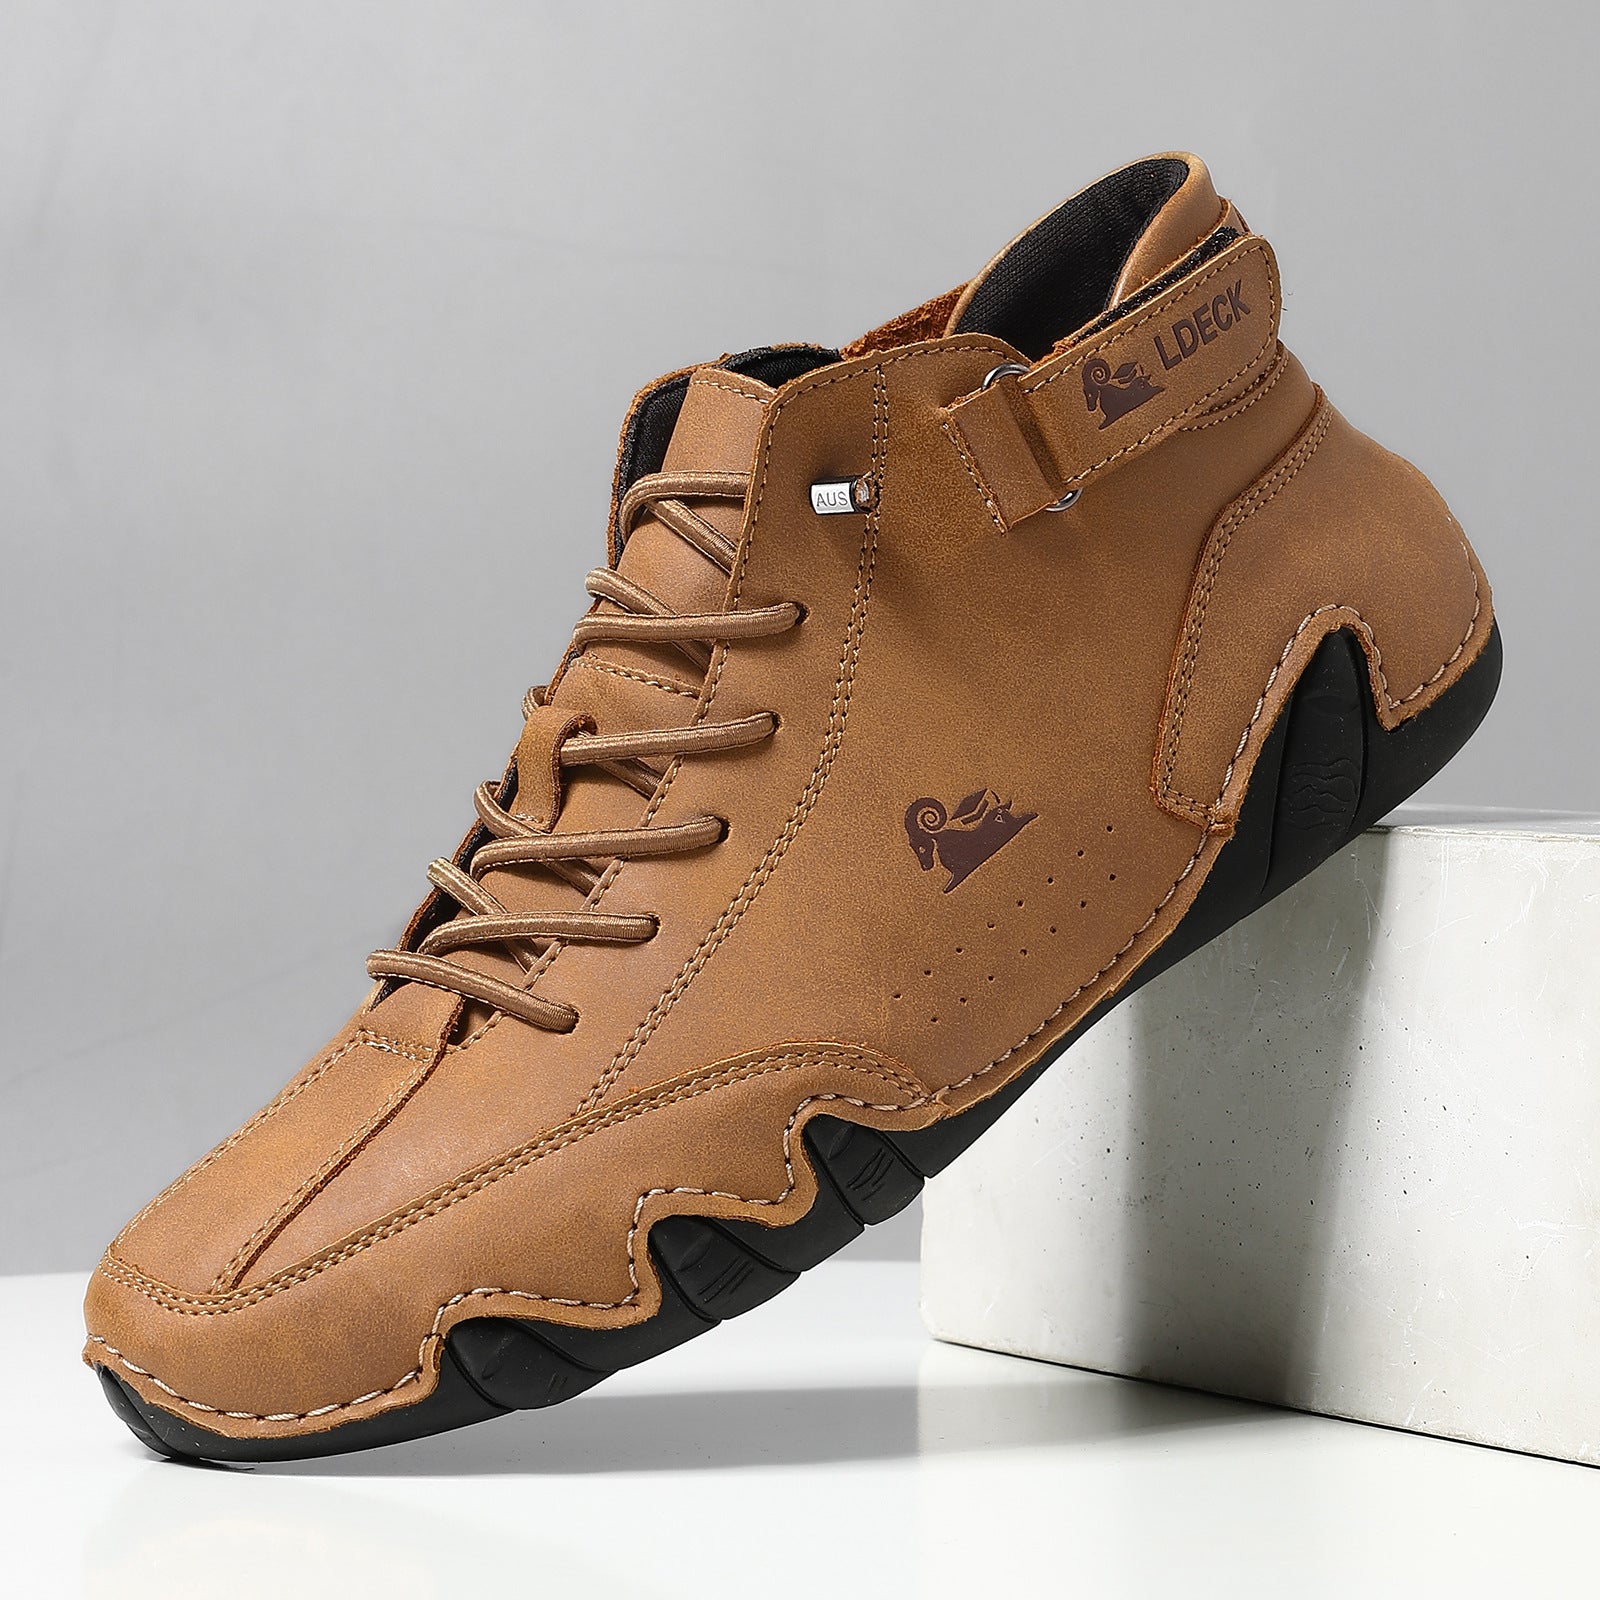 Hendrik™ | The ultimate shoe comfort for all seasons!